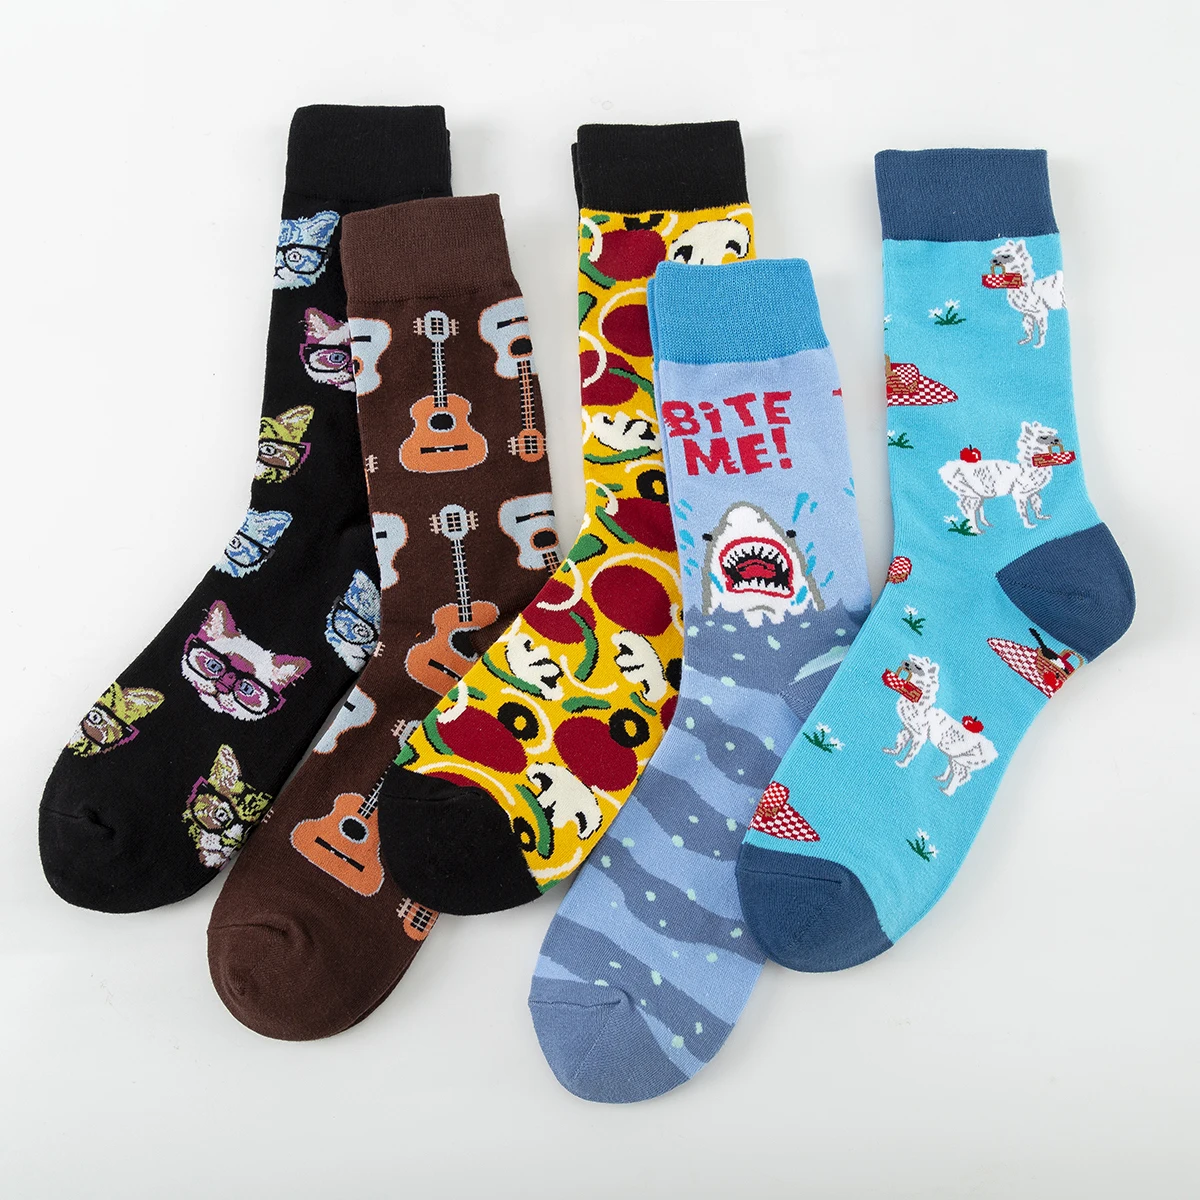 5 Pairs New Color Fashion Casual Men Cotton Socks Happy Cat Guitar Mushroom Alpaca Shark Funny Socks for Men Wholesale